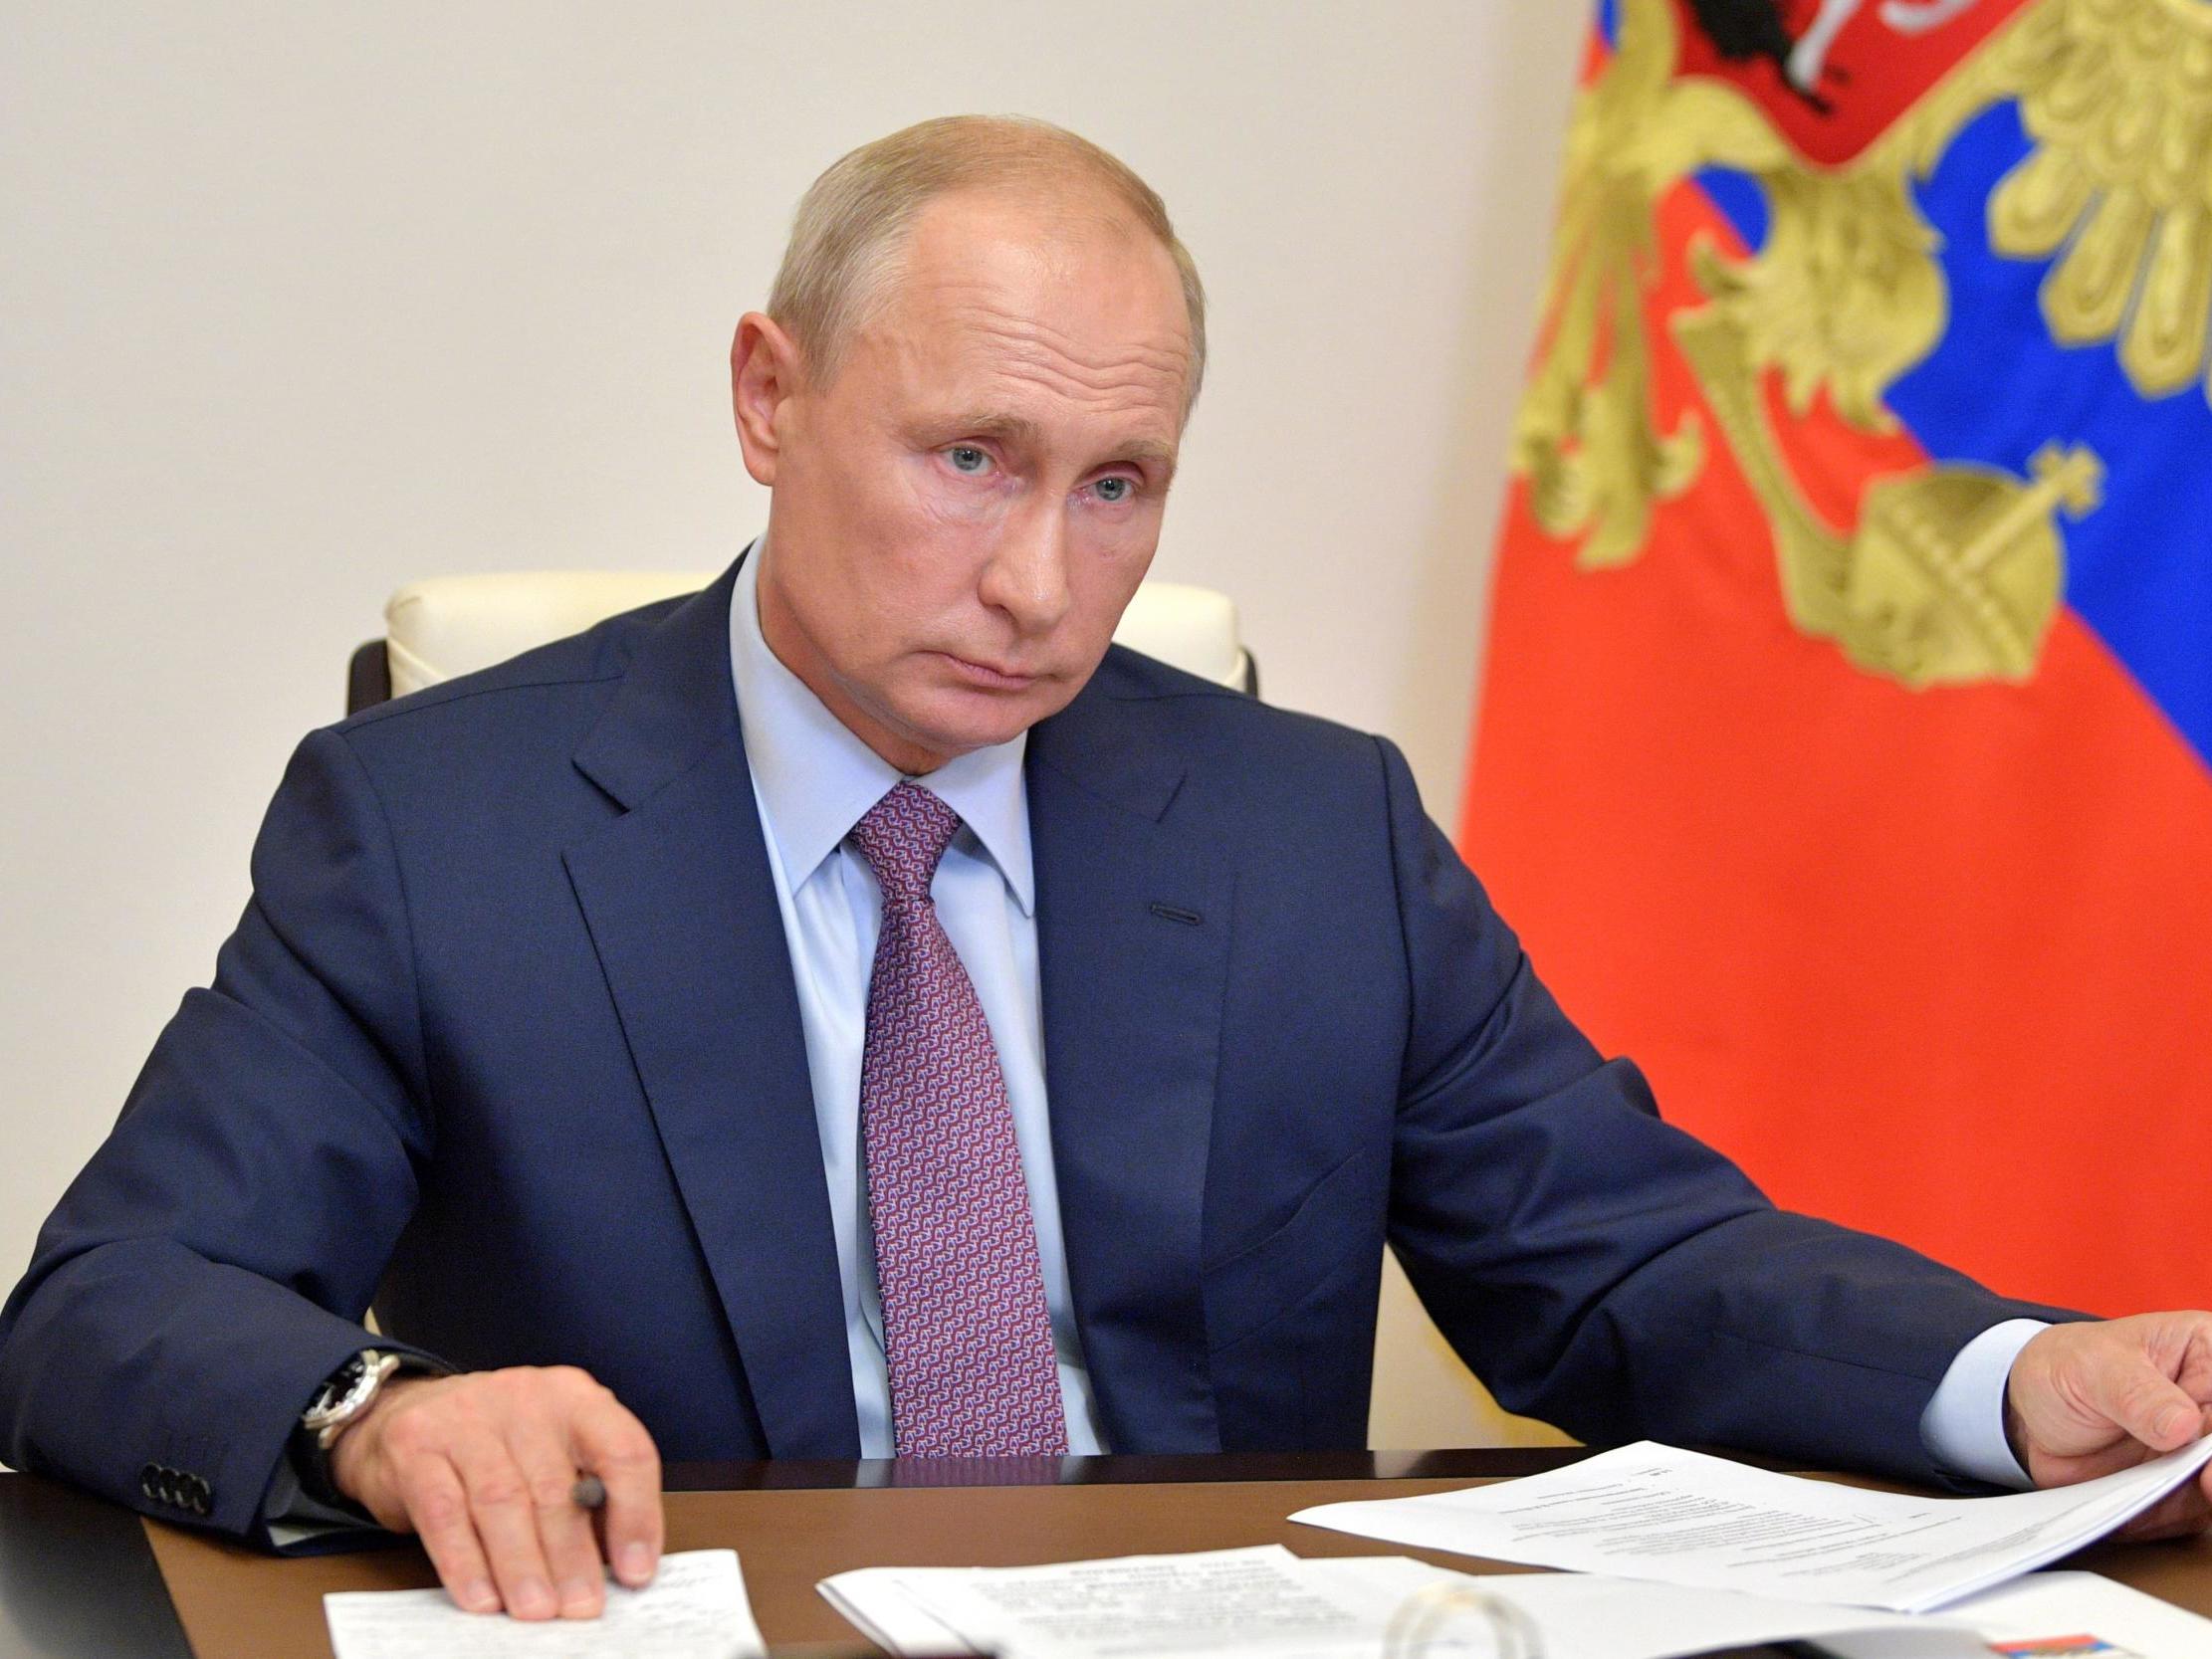 Putin's administration denies any wrongdoing